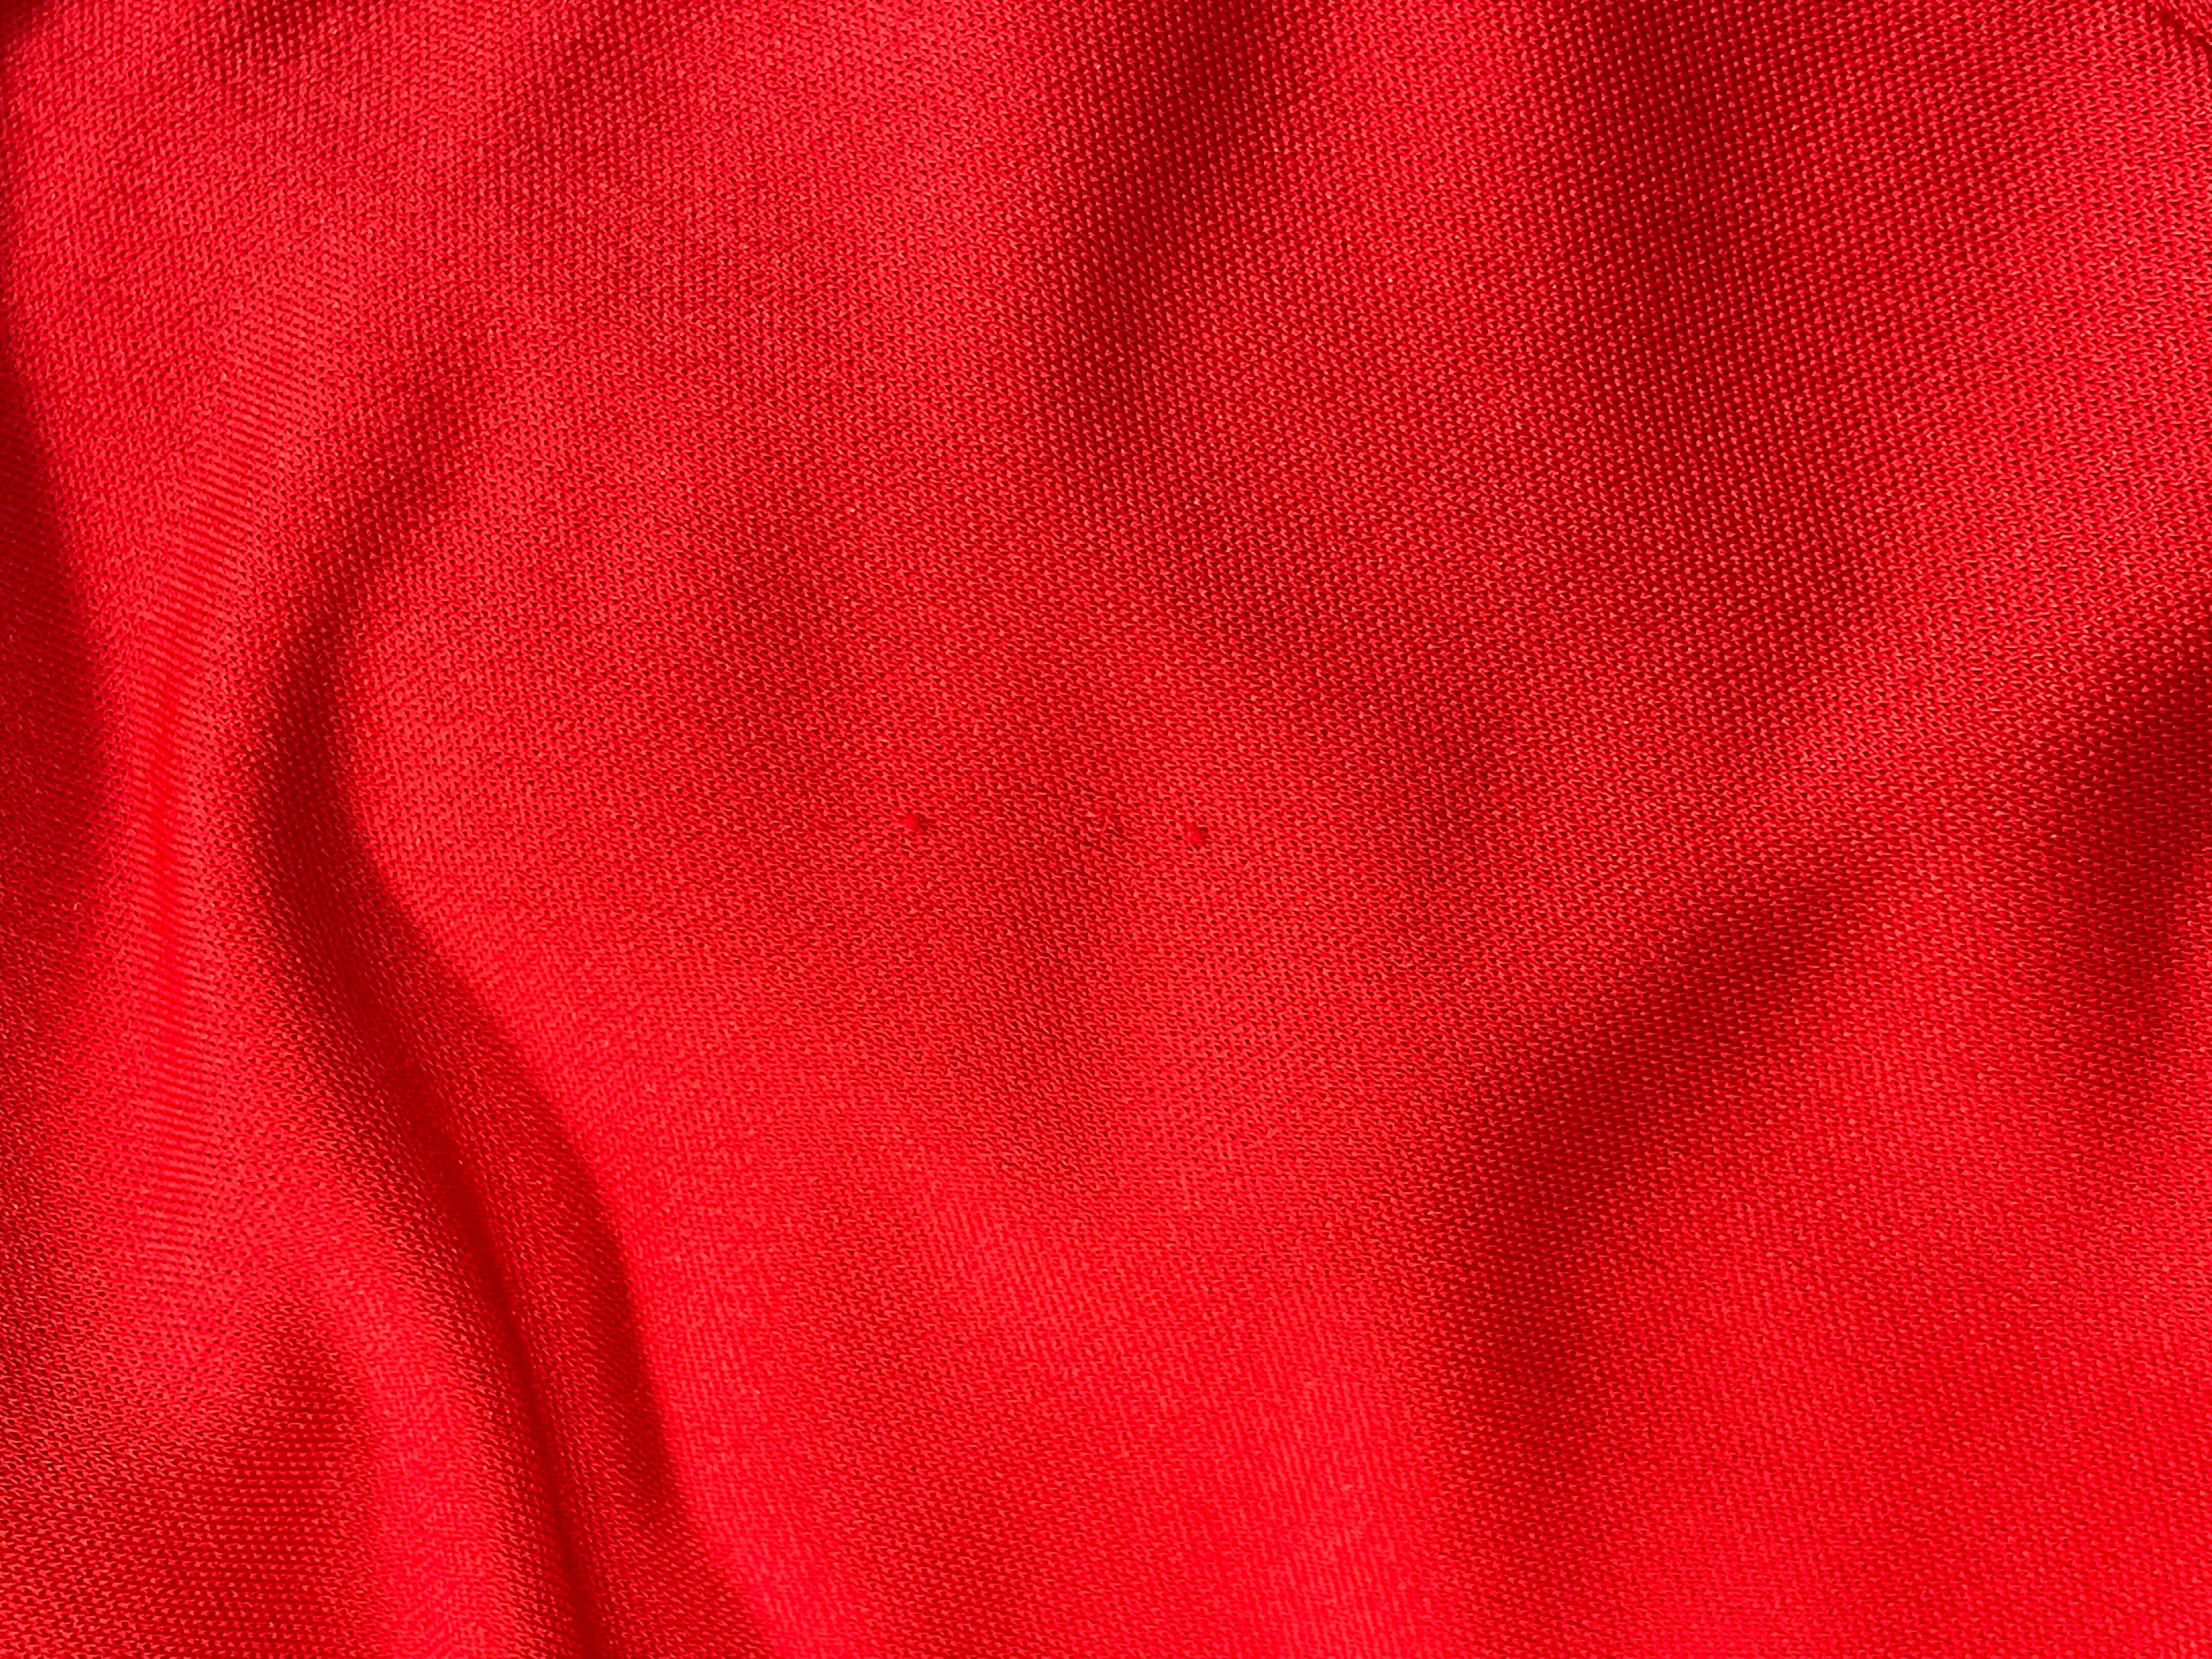 2006 Emanuel Ungaro Plunging Red & Black Lace Wrap Halter Dress 1